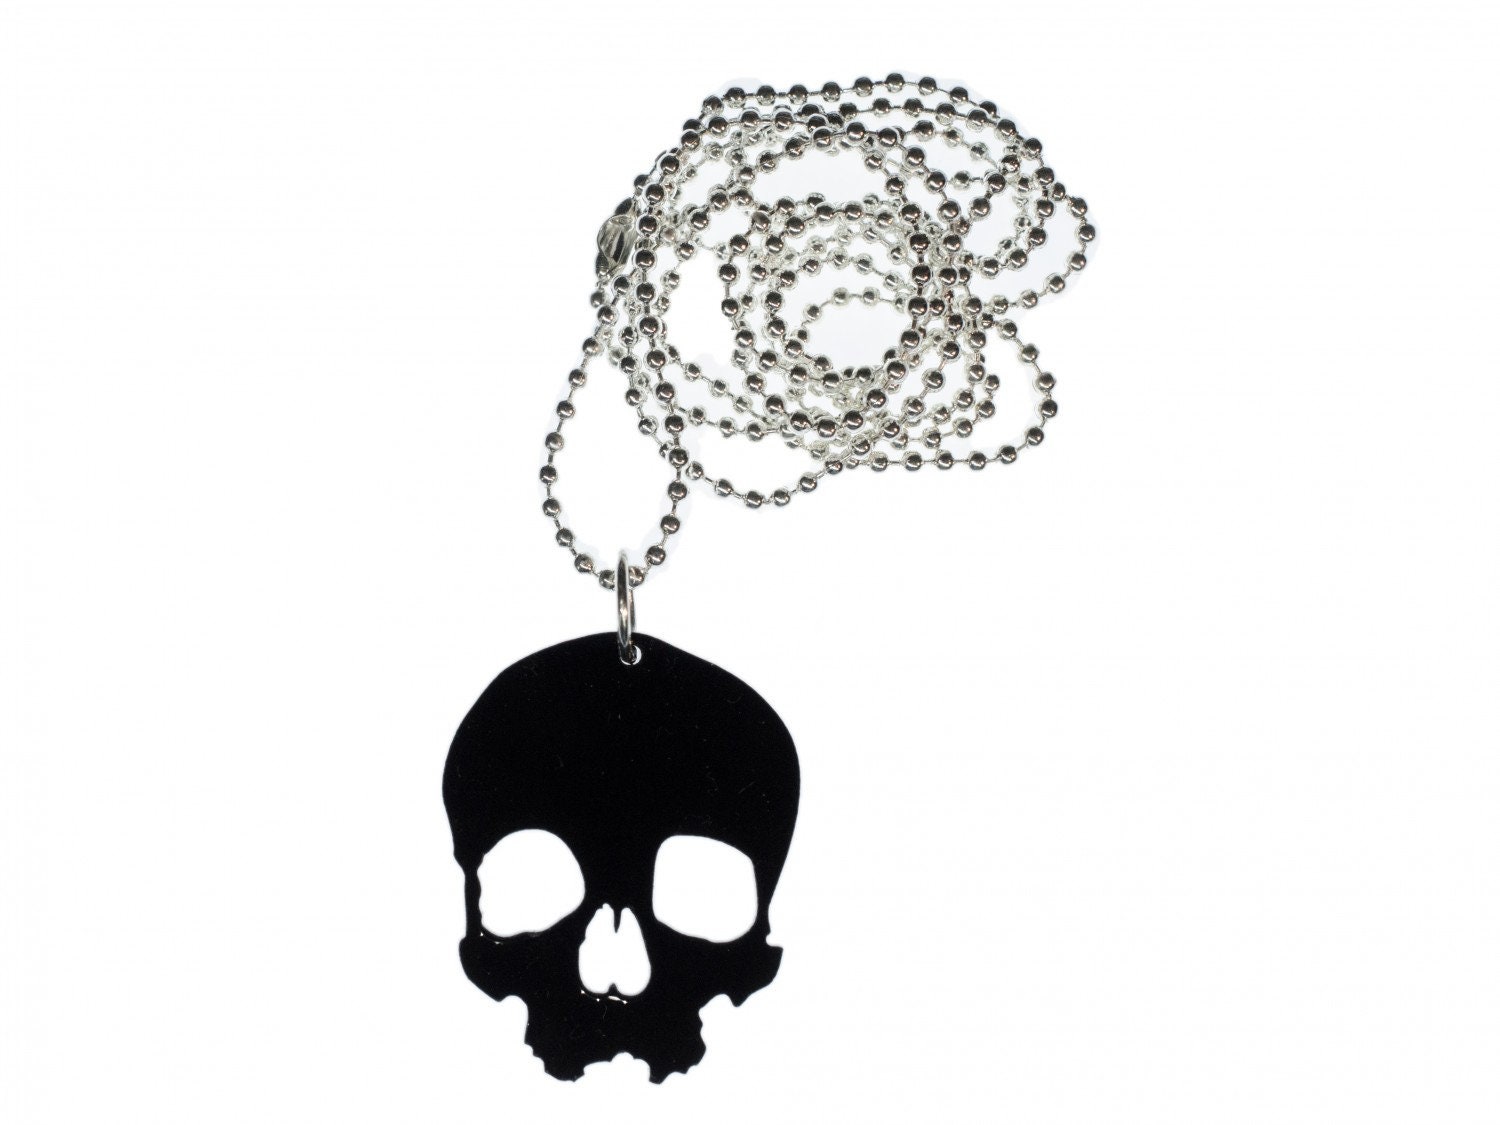 Totenkopf Kette Miniblings Acrylglas Schwarz Schädel Skull Gothic Halloween 80cm von Miniblings